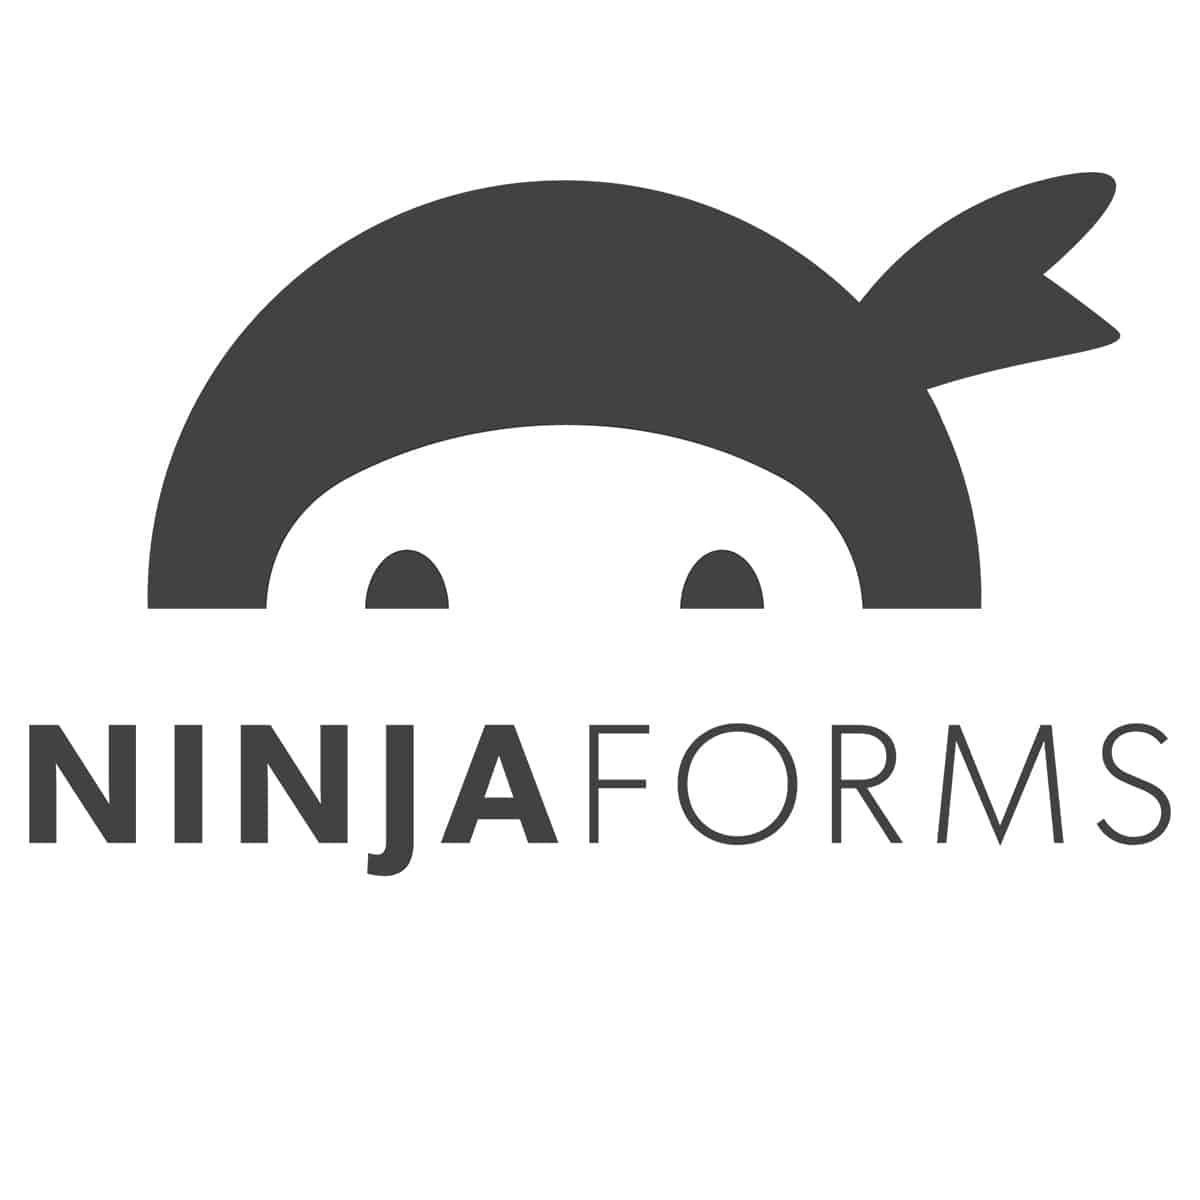 Ninja Forms logo.